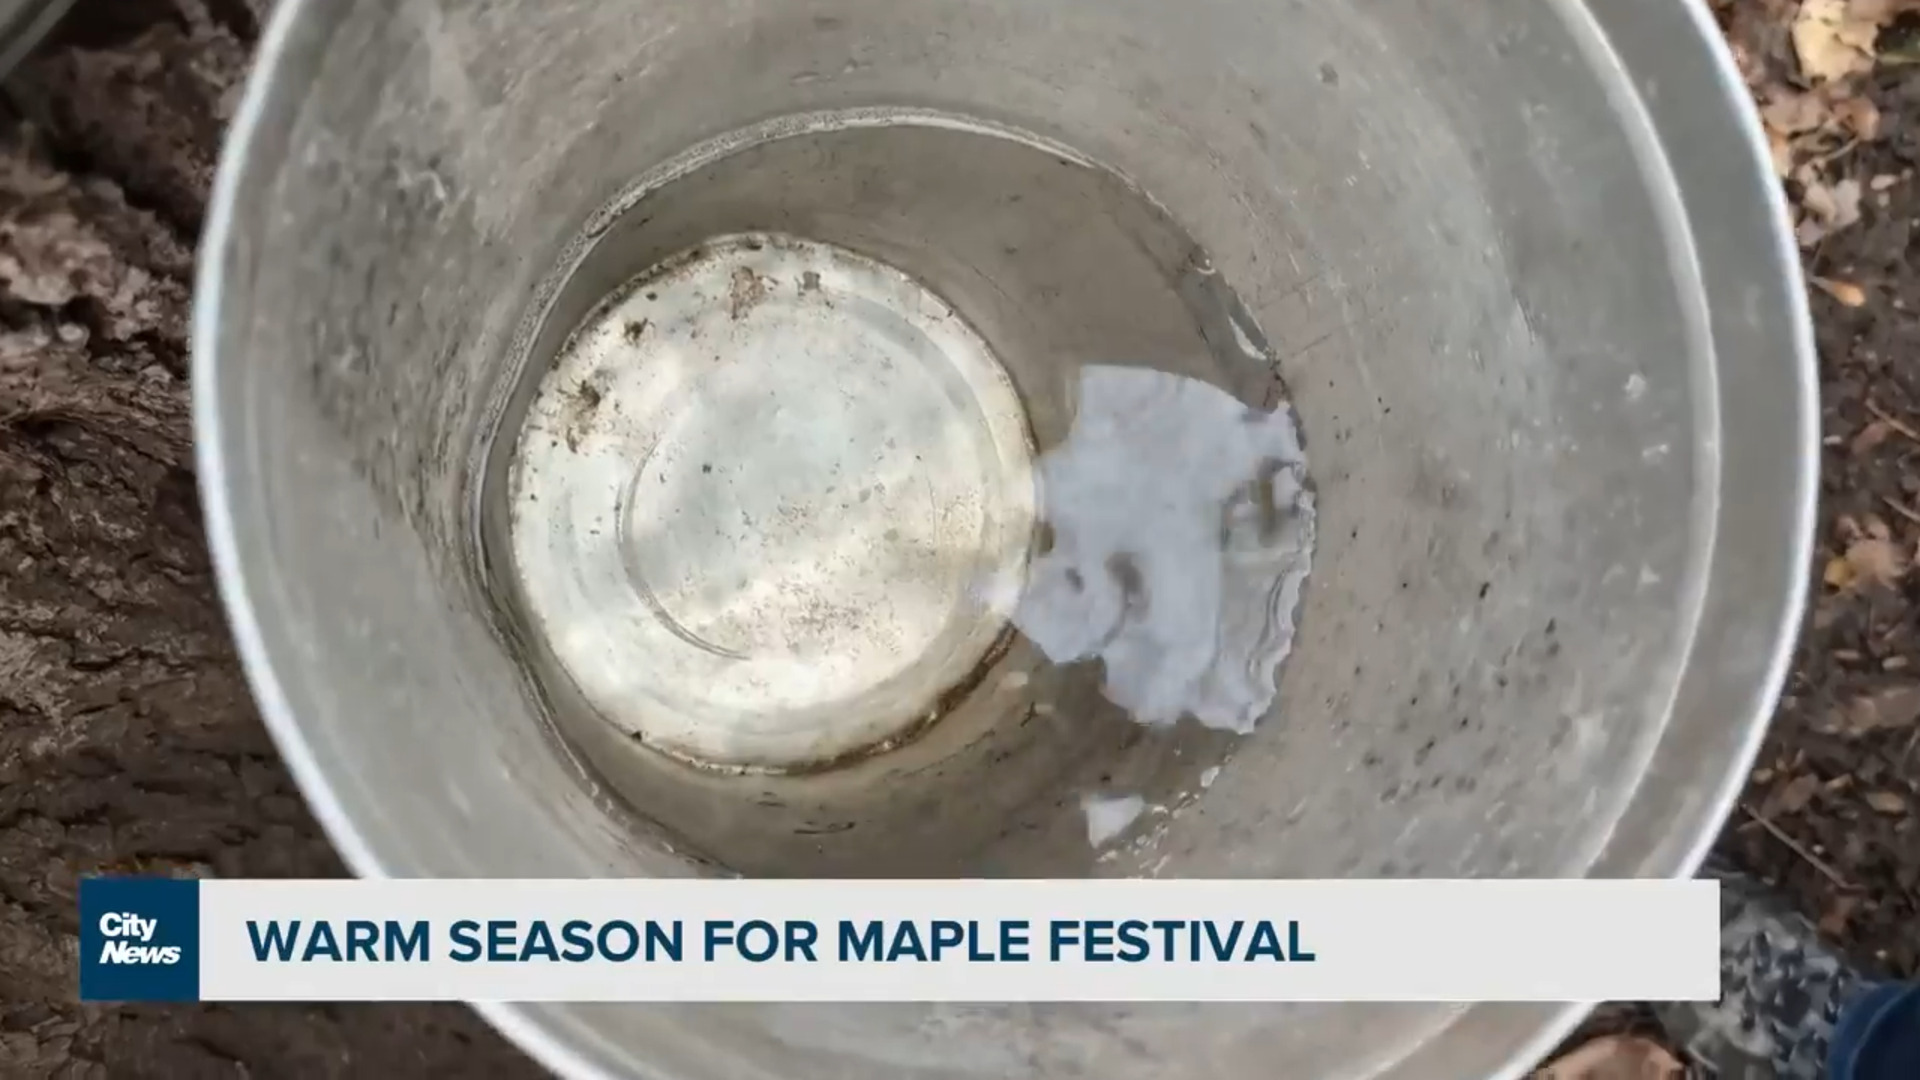 Maple festival prepares for warm season